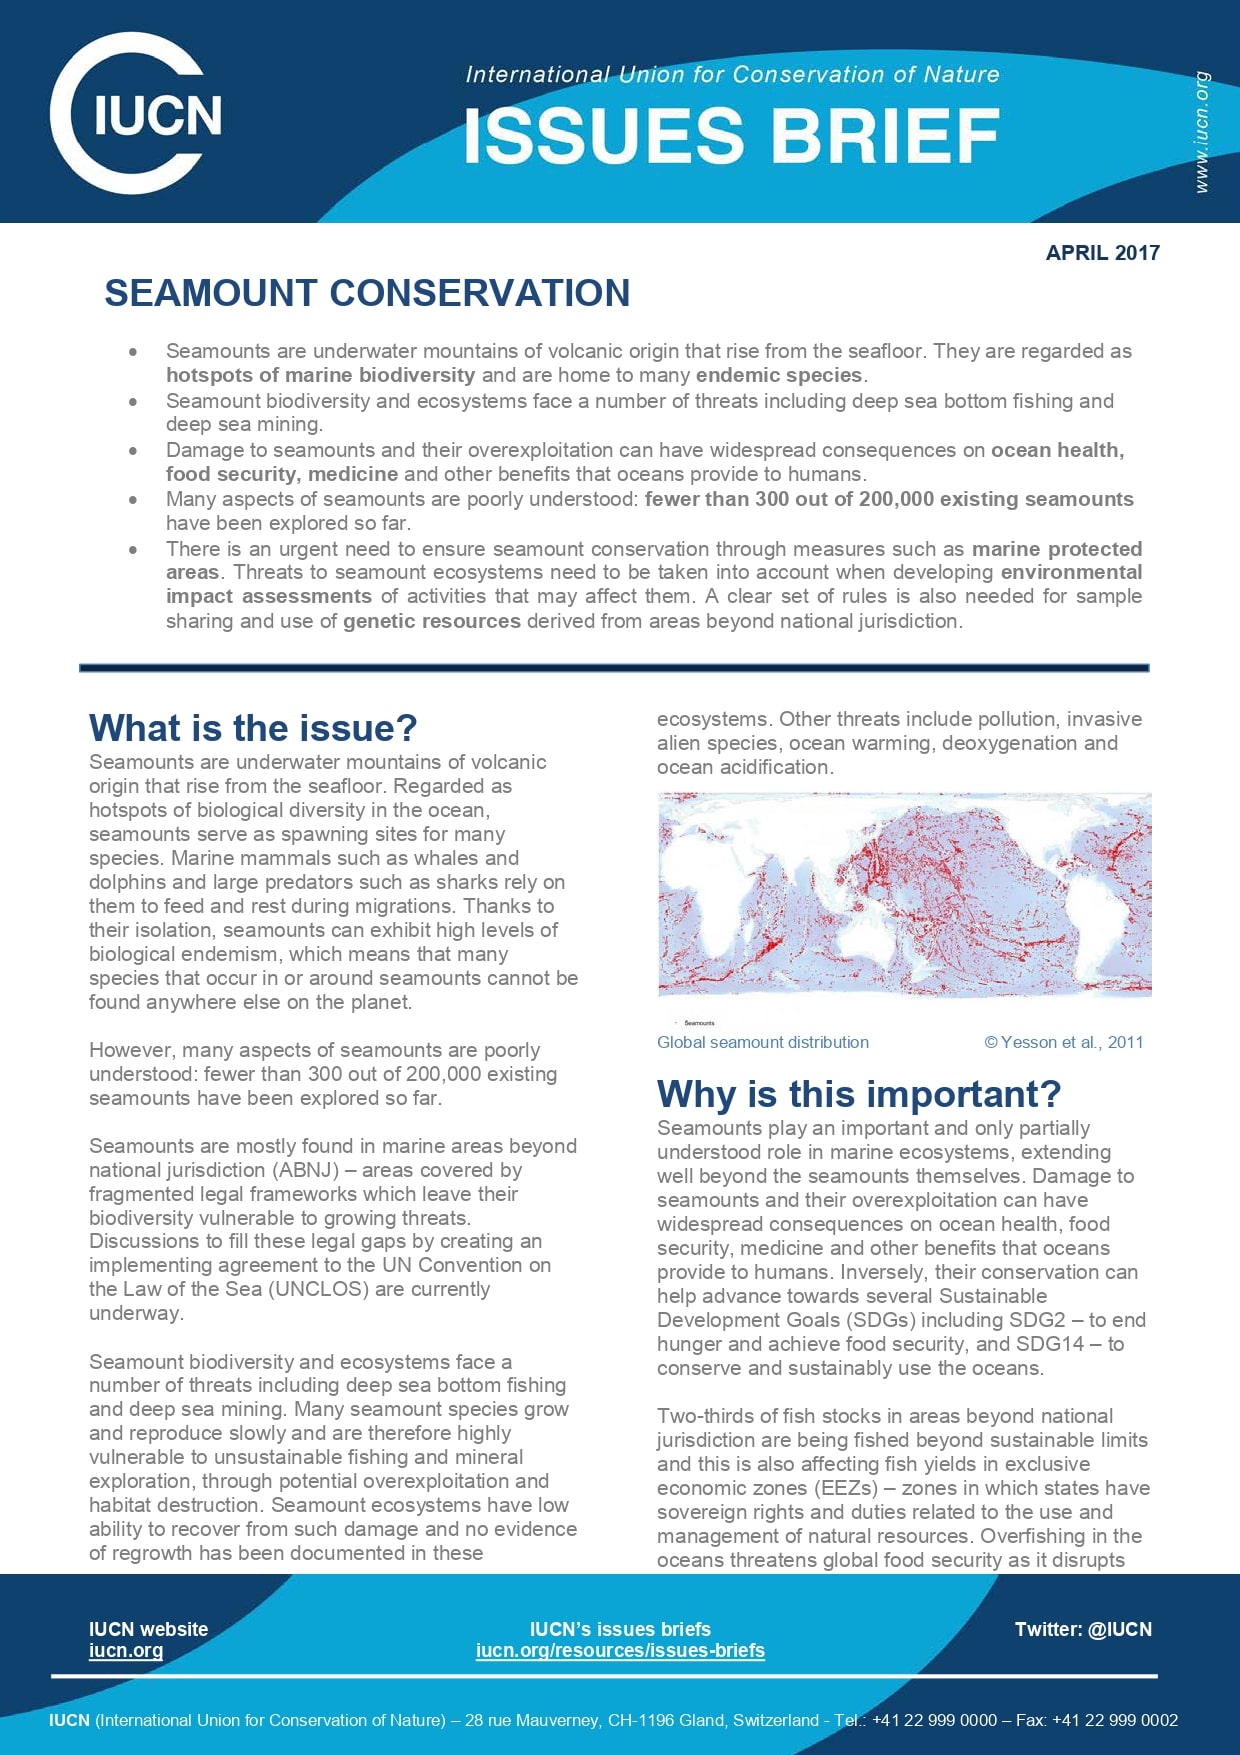 Seamount conservation